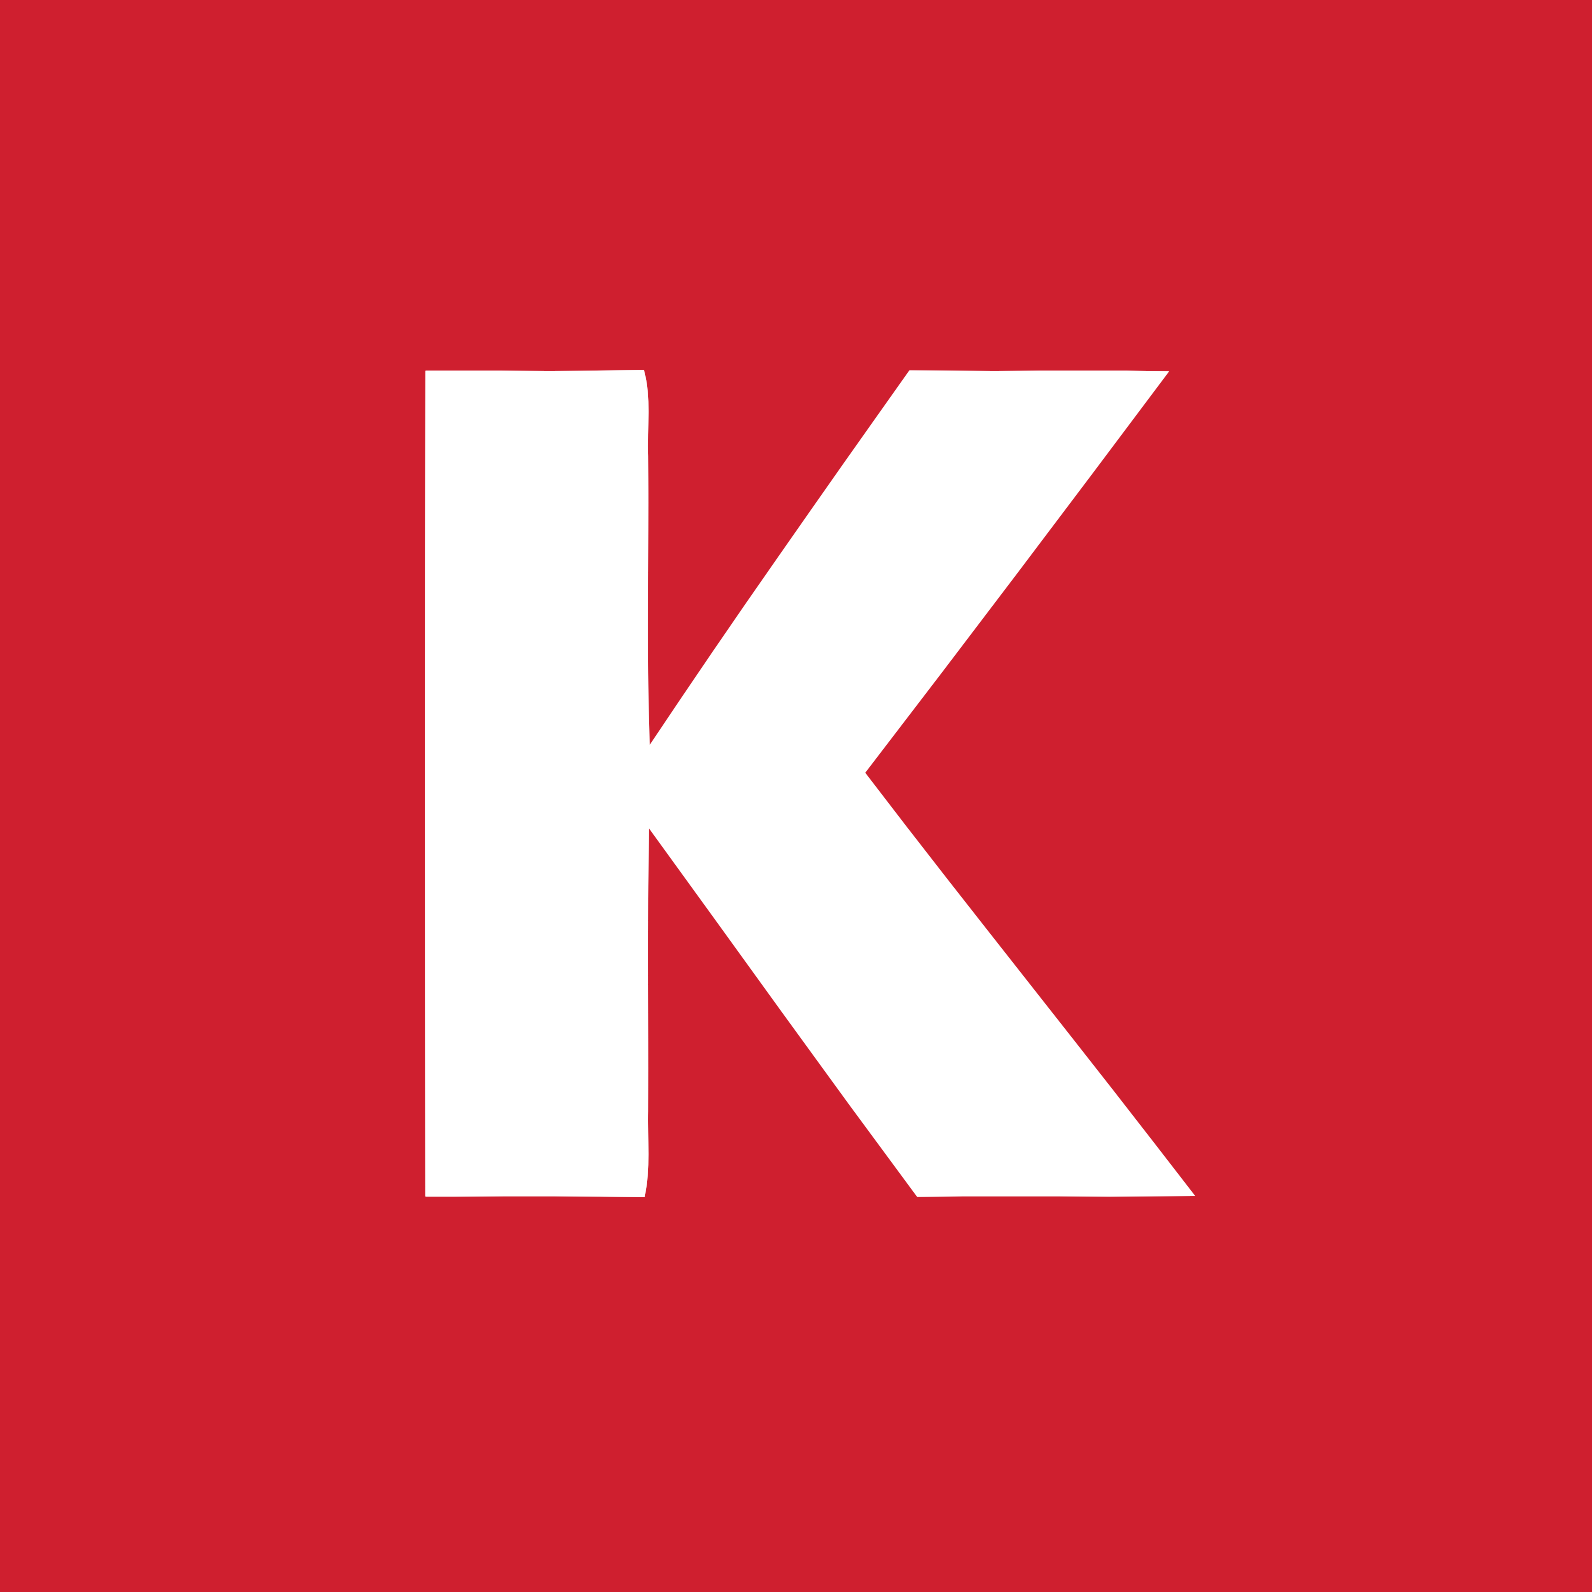 Kilroy Realty logo (PNG transparent)